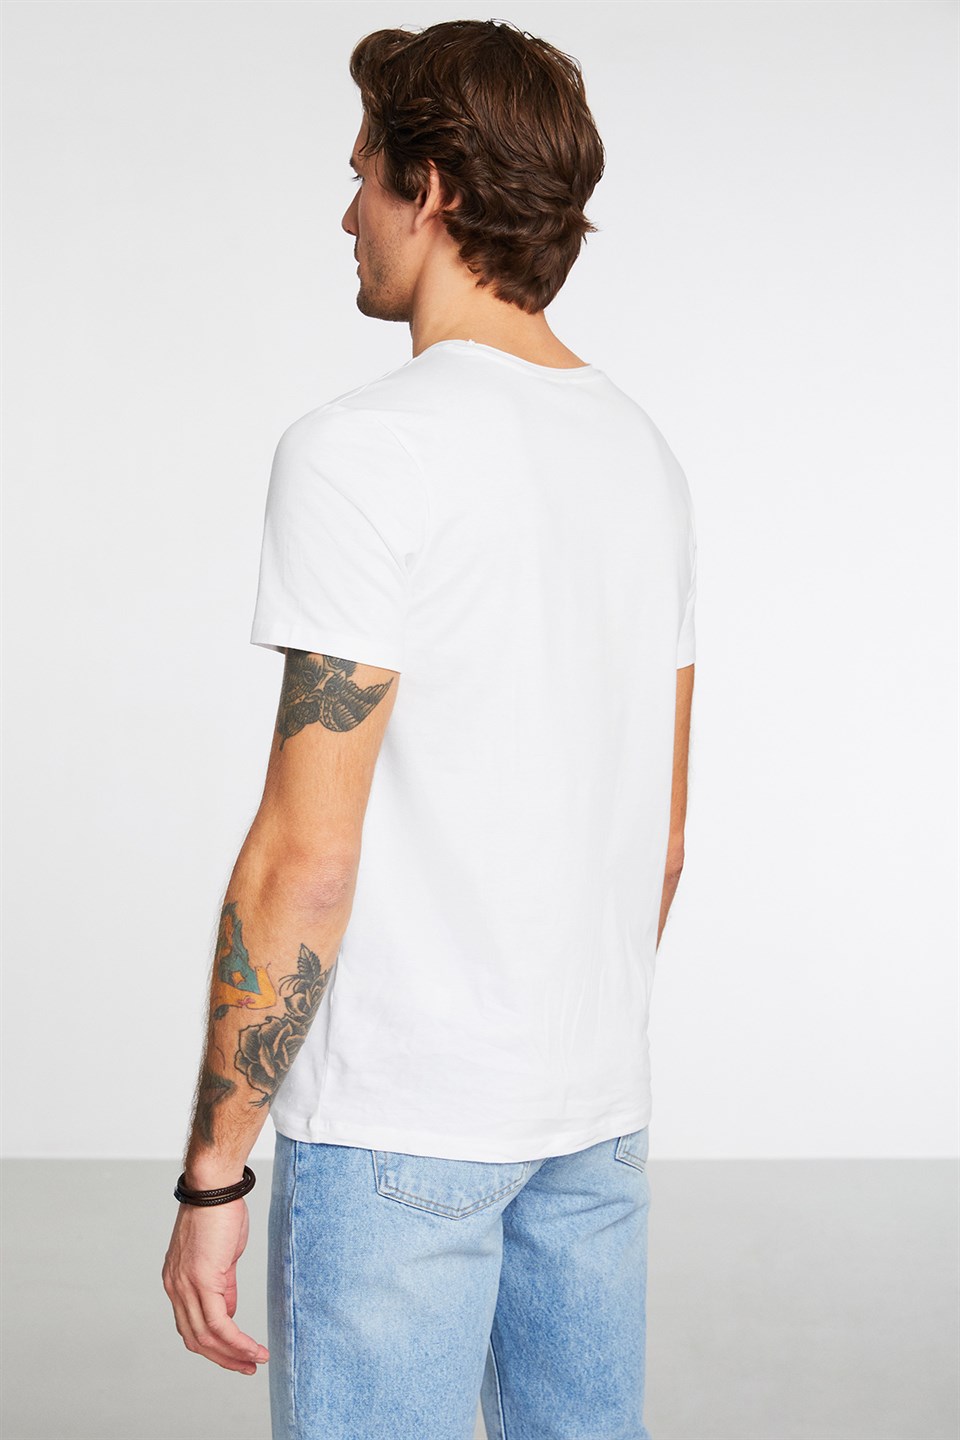 JACE Erkek Beyaz Düz Renk Yuvarlak Yaka Slim Fit T-Shirt